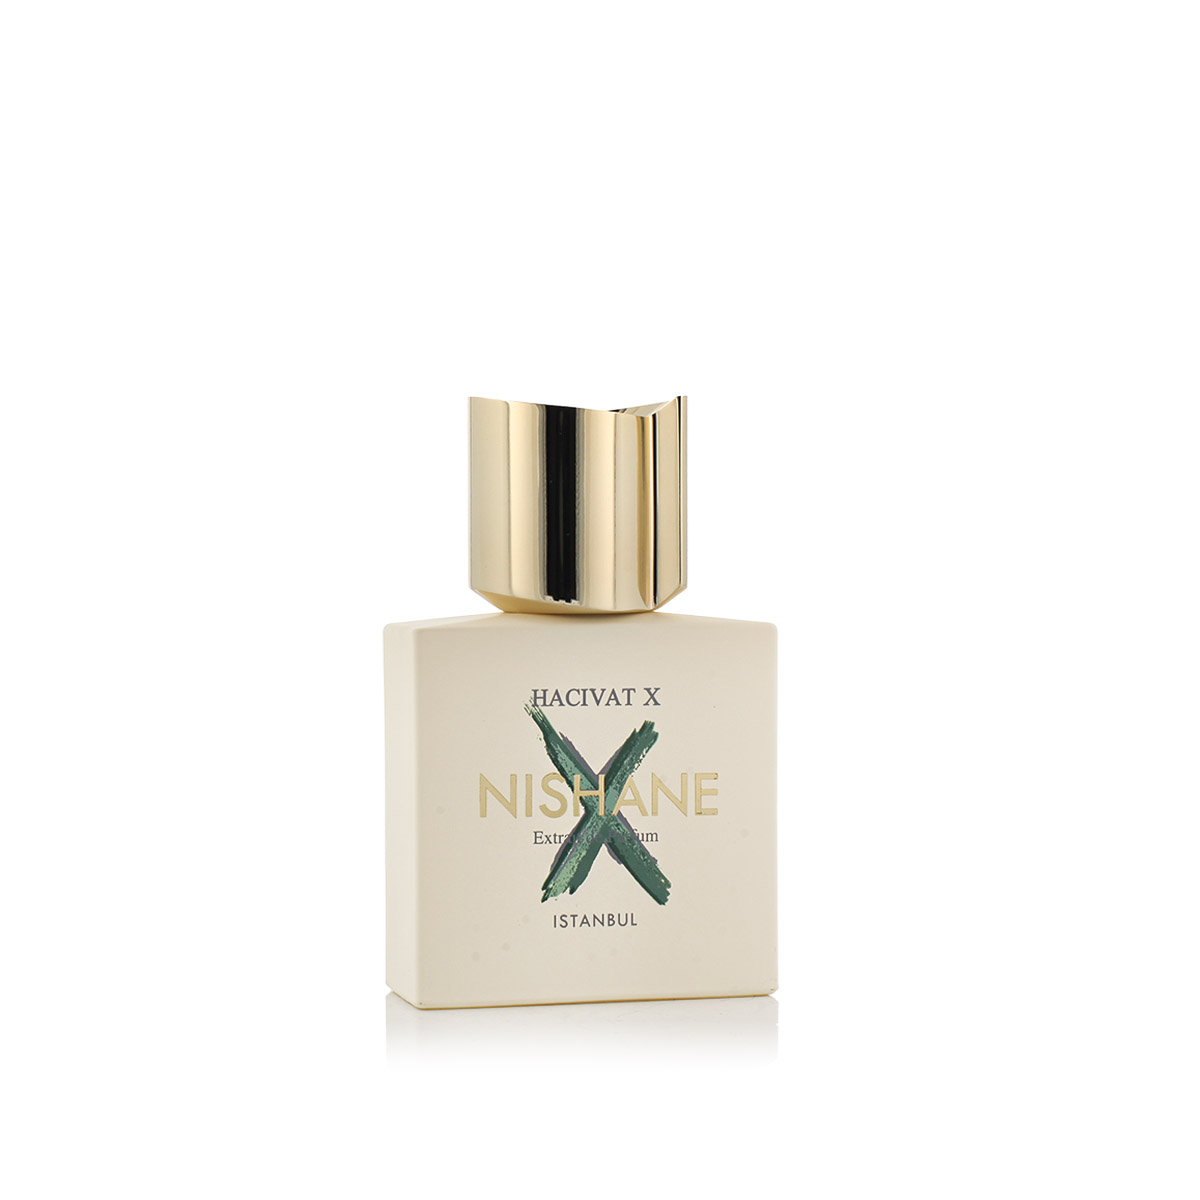 Nishane Hacivat X Extrait De Parfum 50ml NIŠINIAI Kvepalai Unisex Parfum